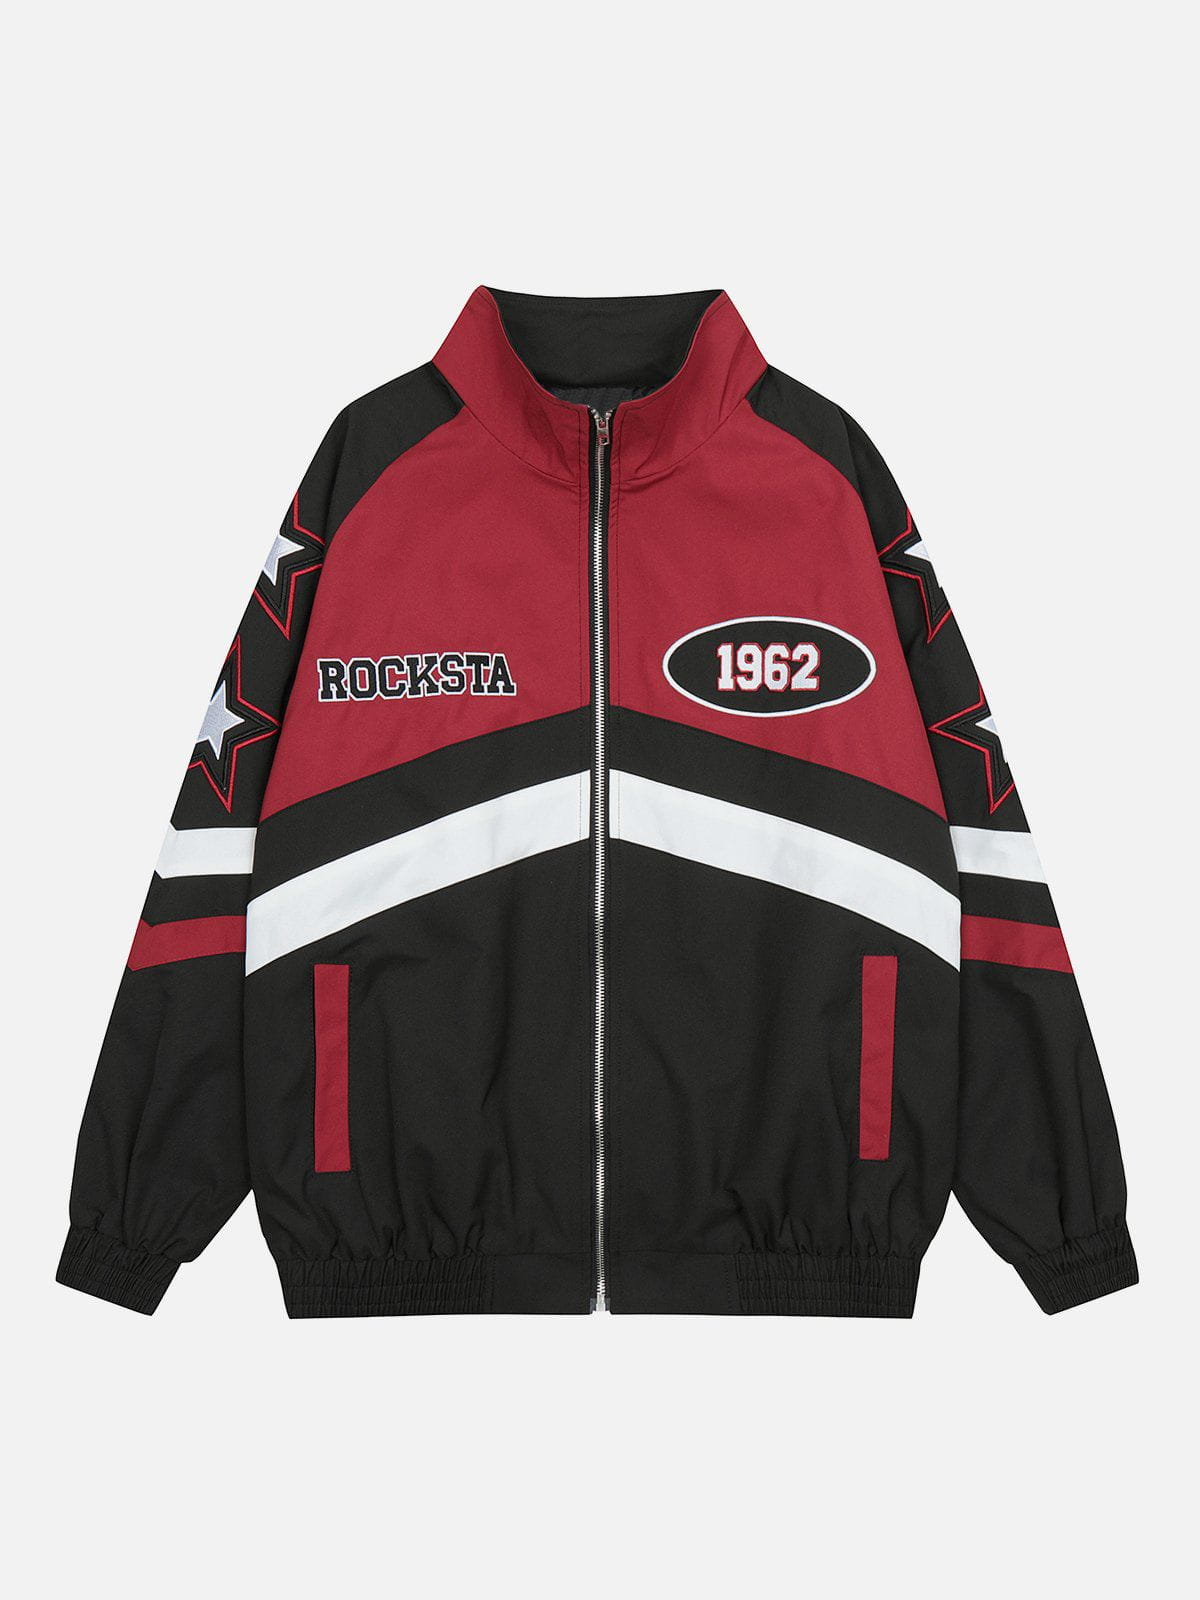 Majesda® - Patchwork Stripe Racing Jacket outfit ideas, streetwear fashion - majesda.com